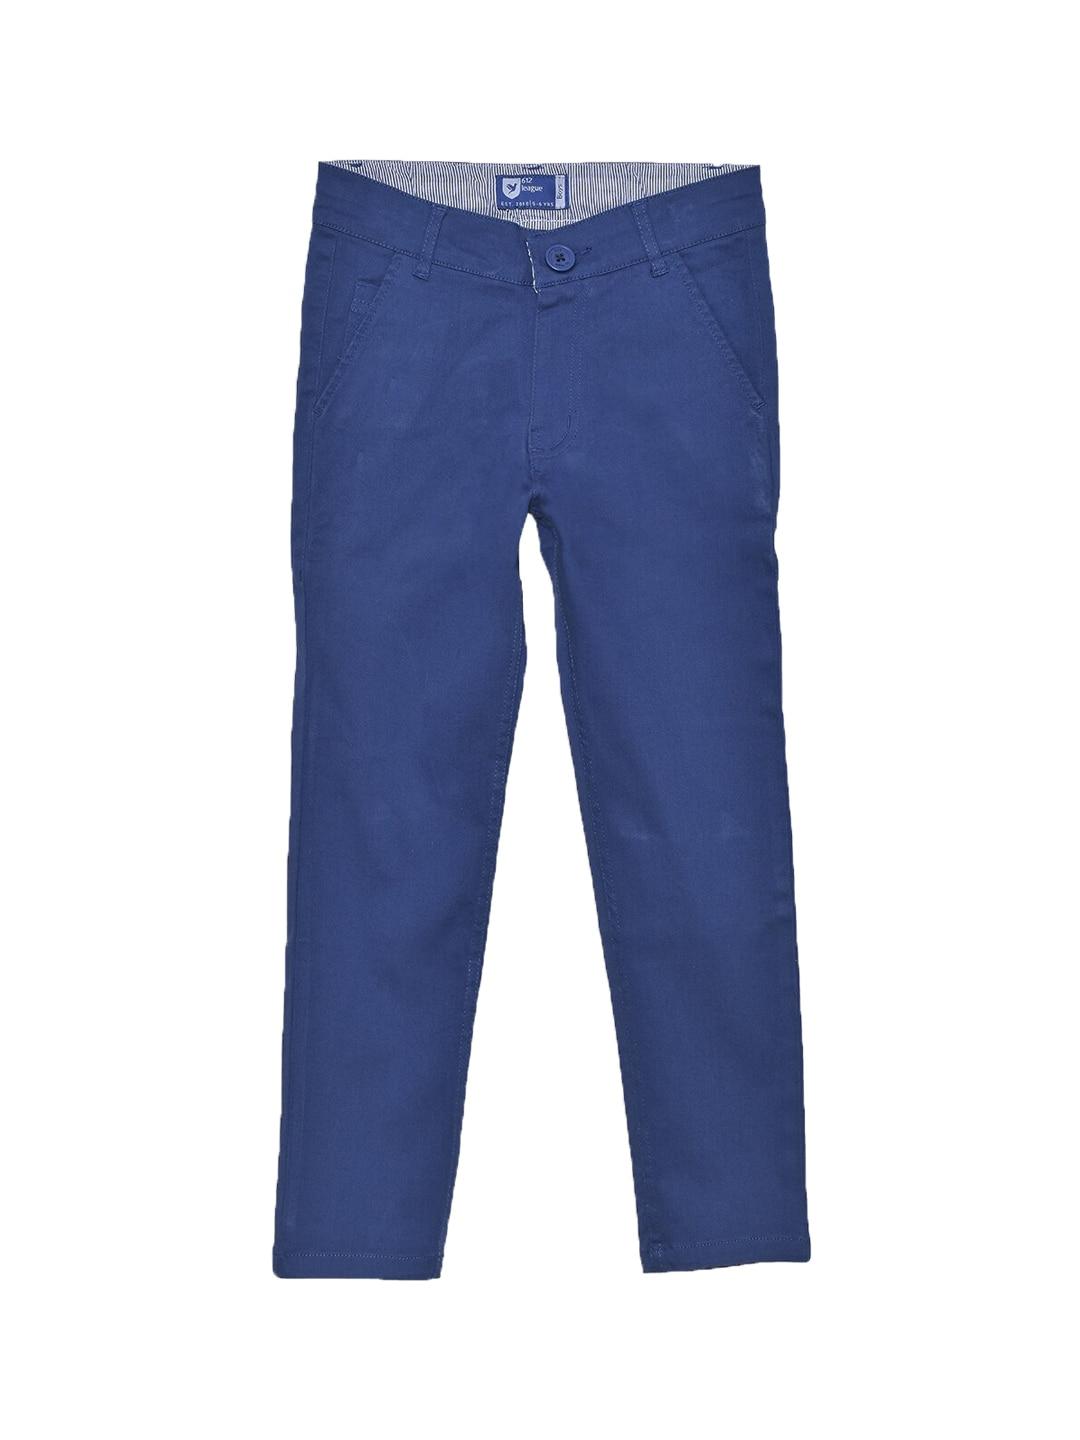 612League Boys Blue Cotton Chinos Trousers